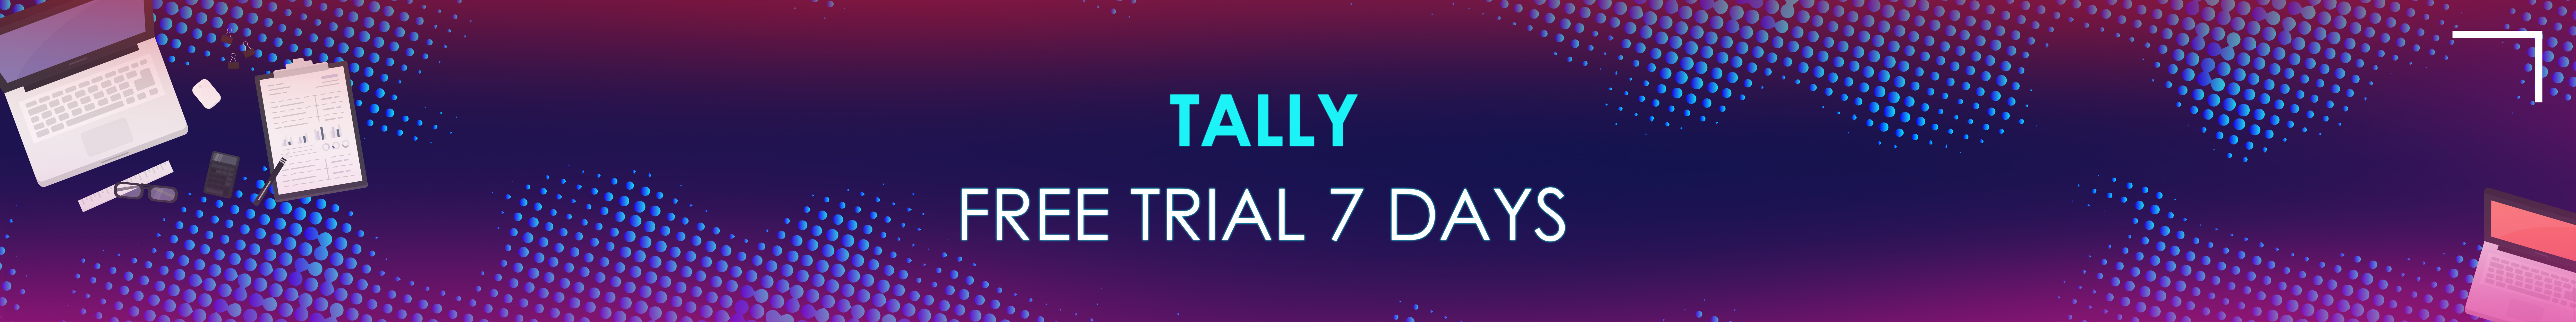 Tally-Free-Trail-7